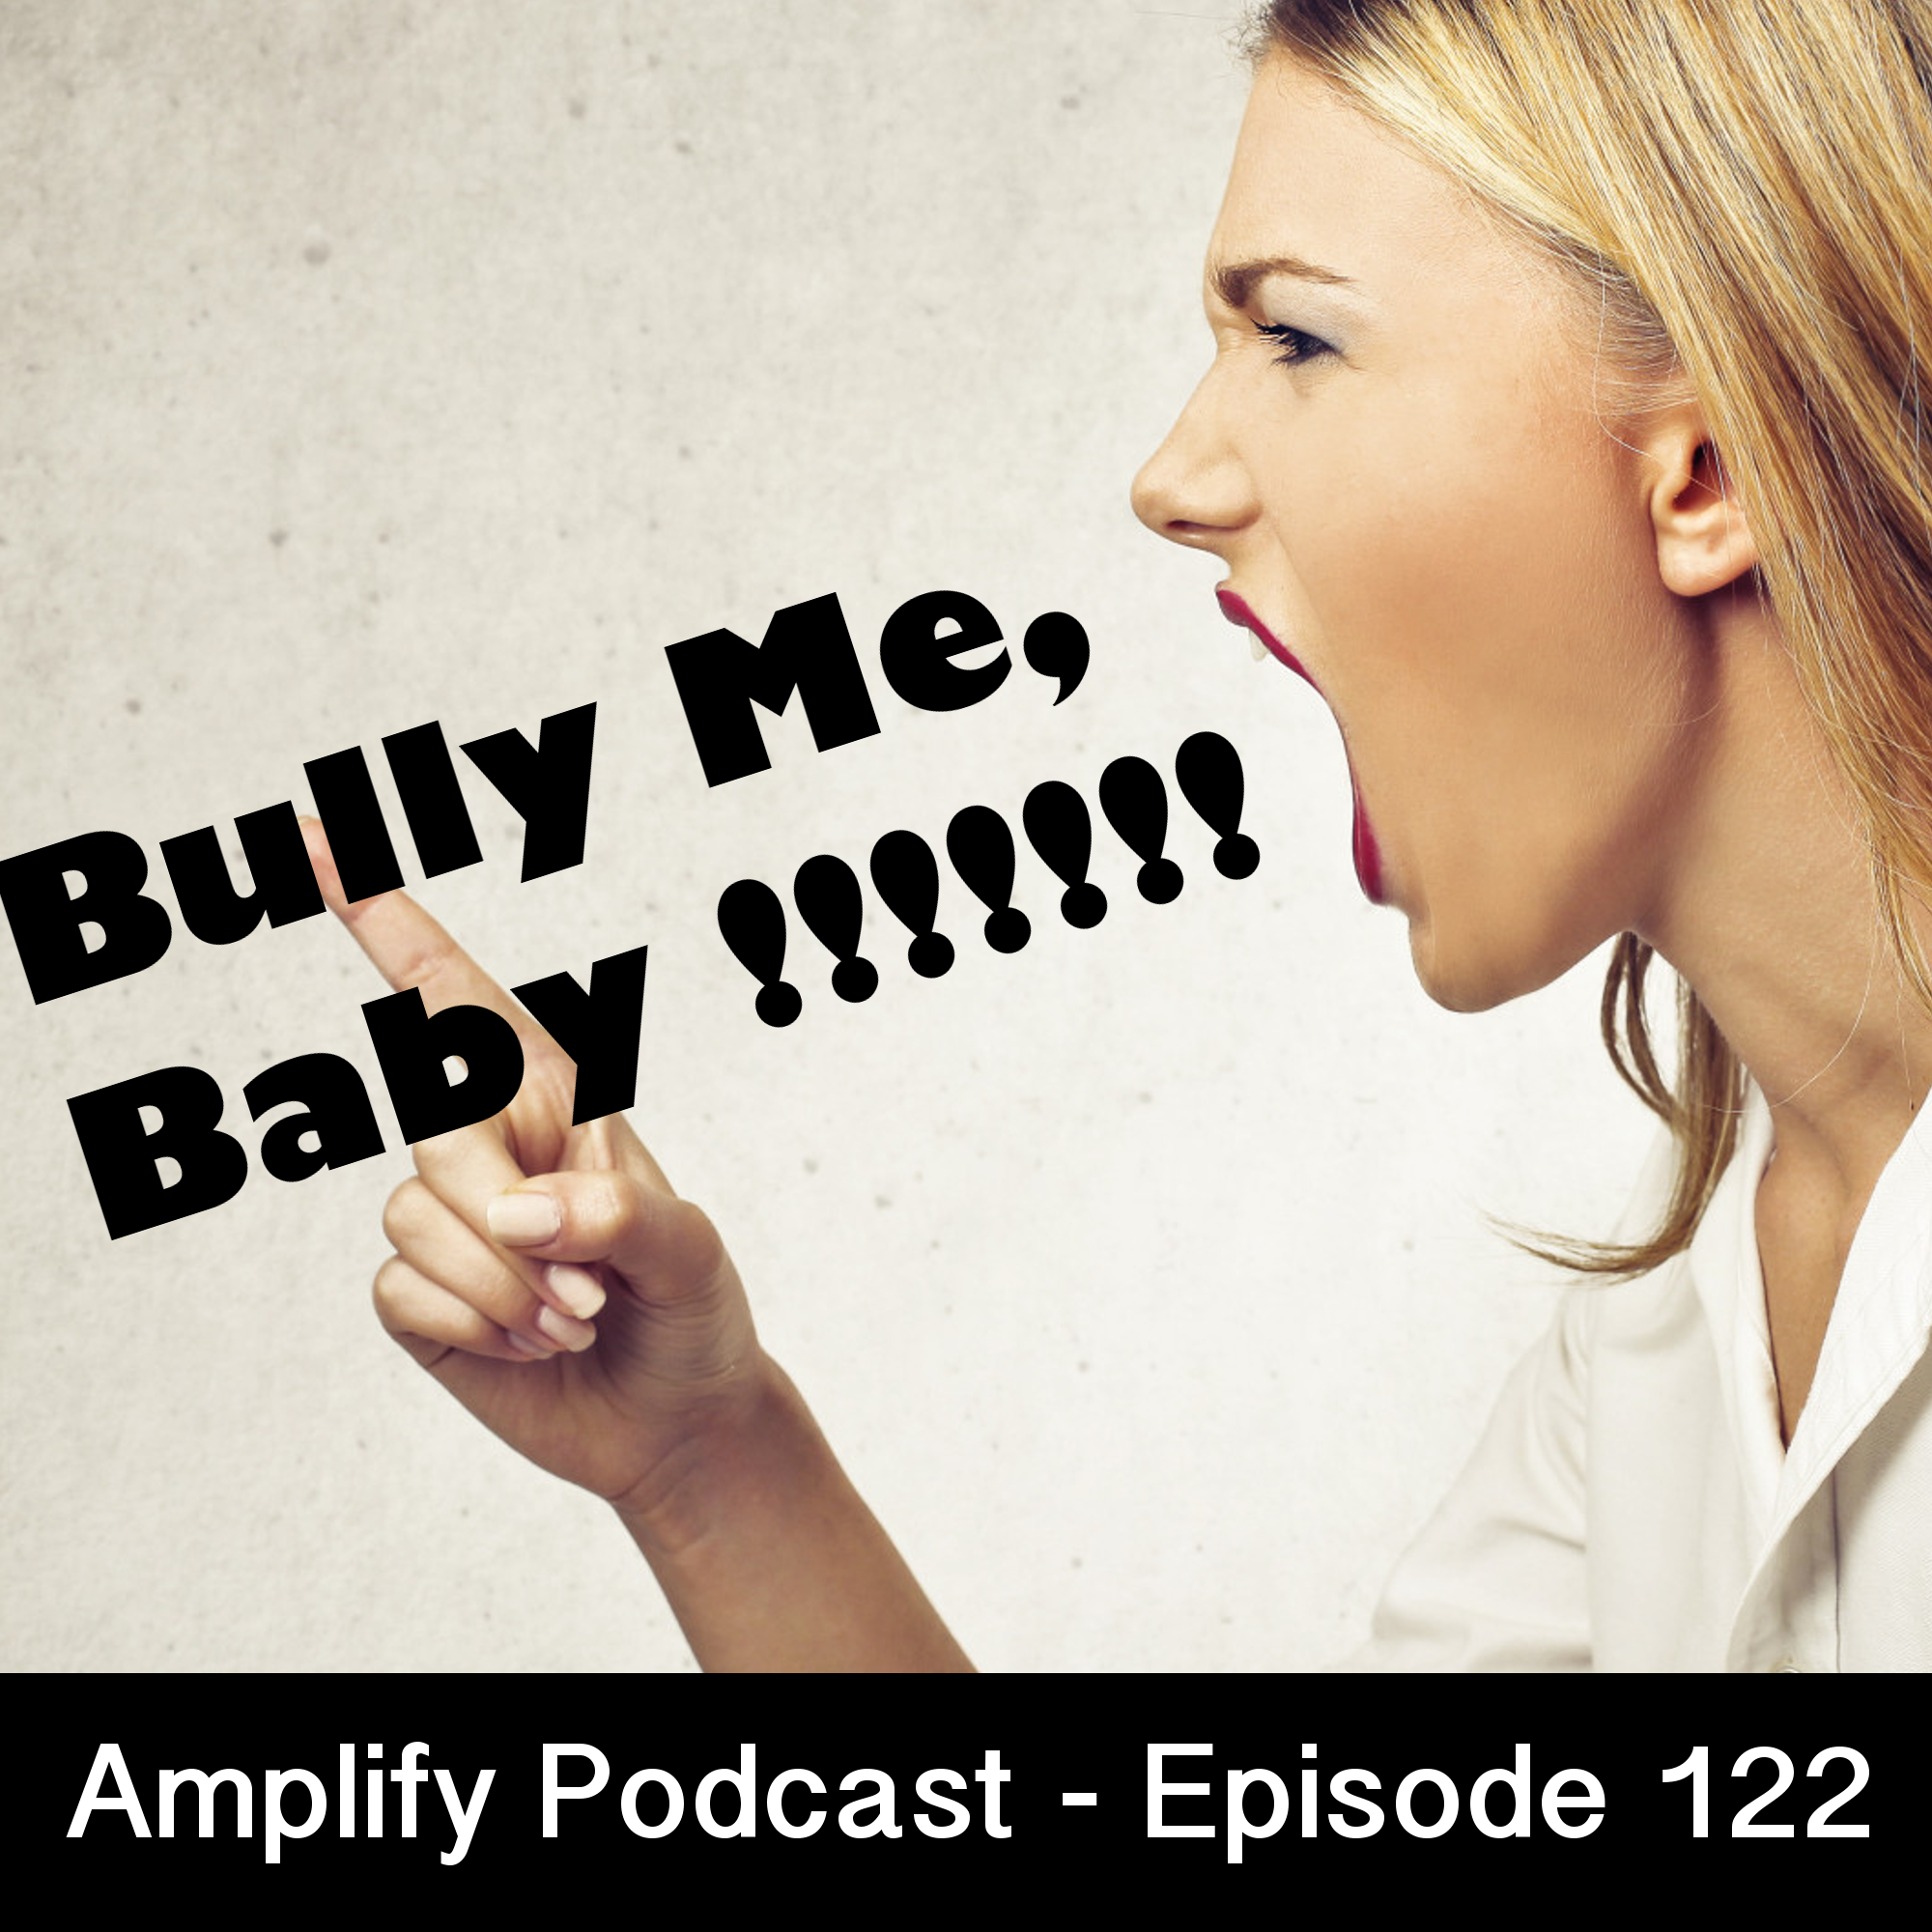 Bully Me, Baby!!!